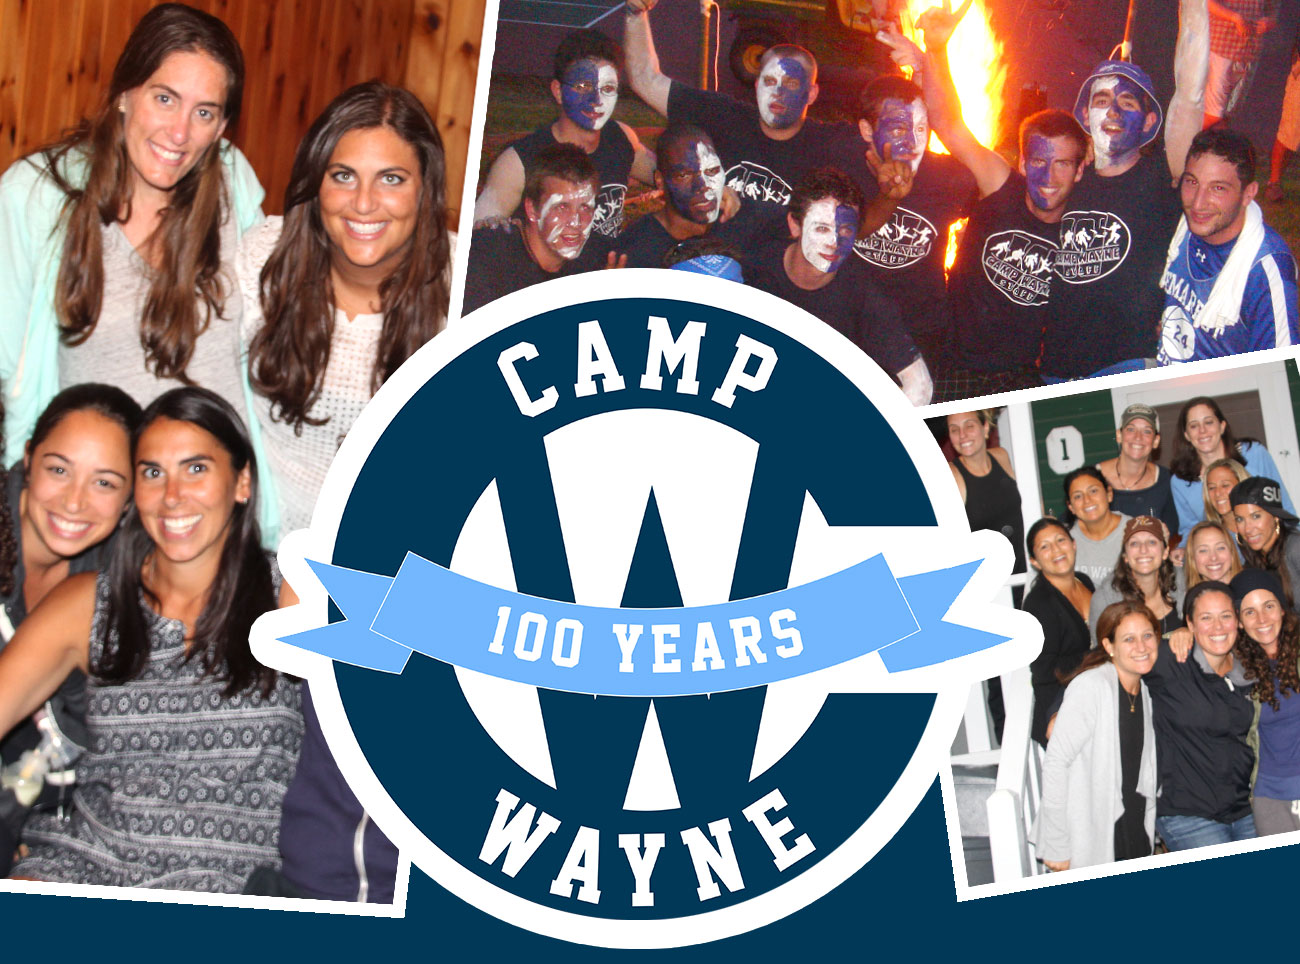 Camp Wayne 100 Years